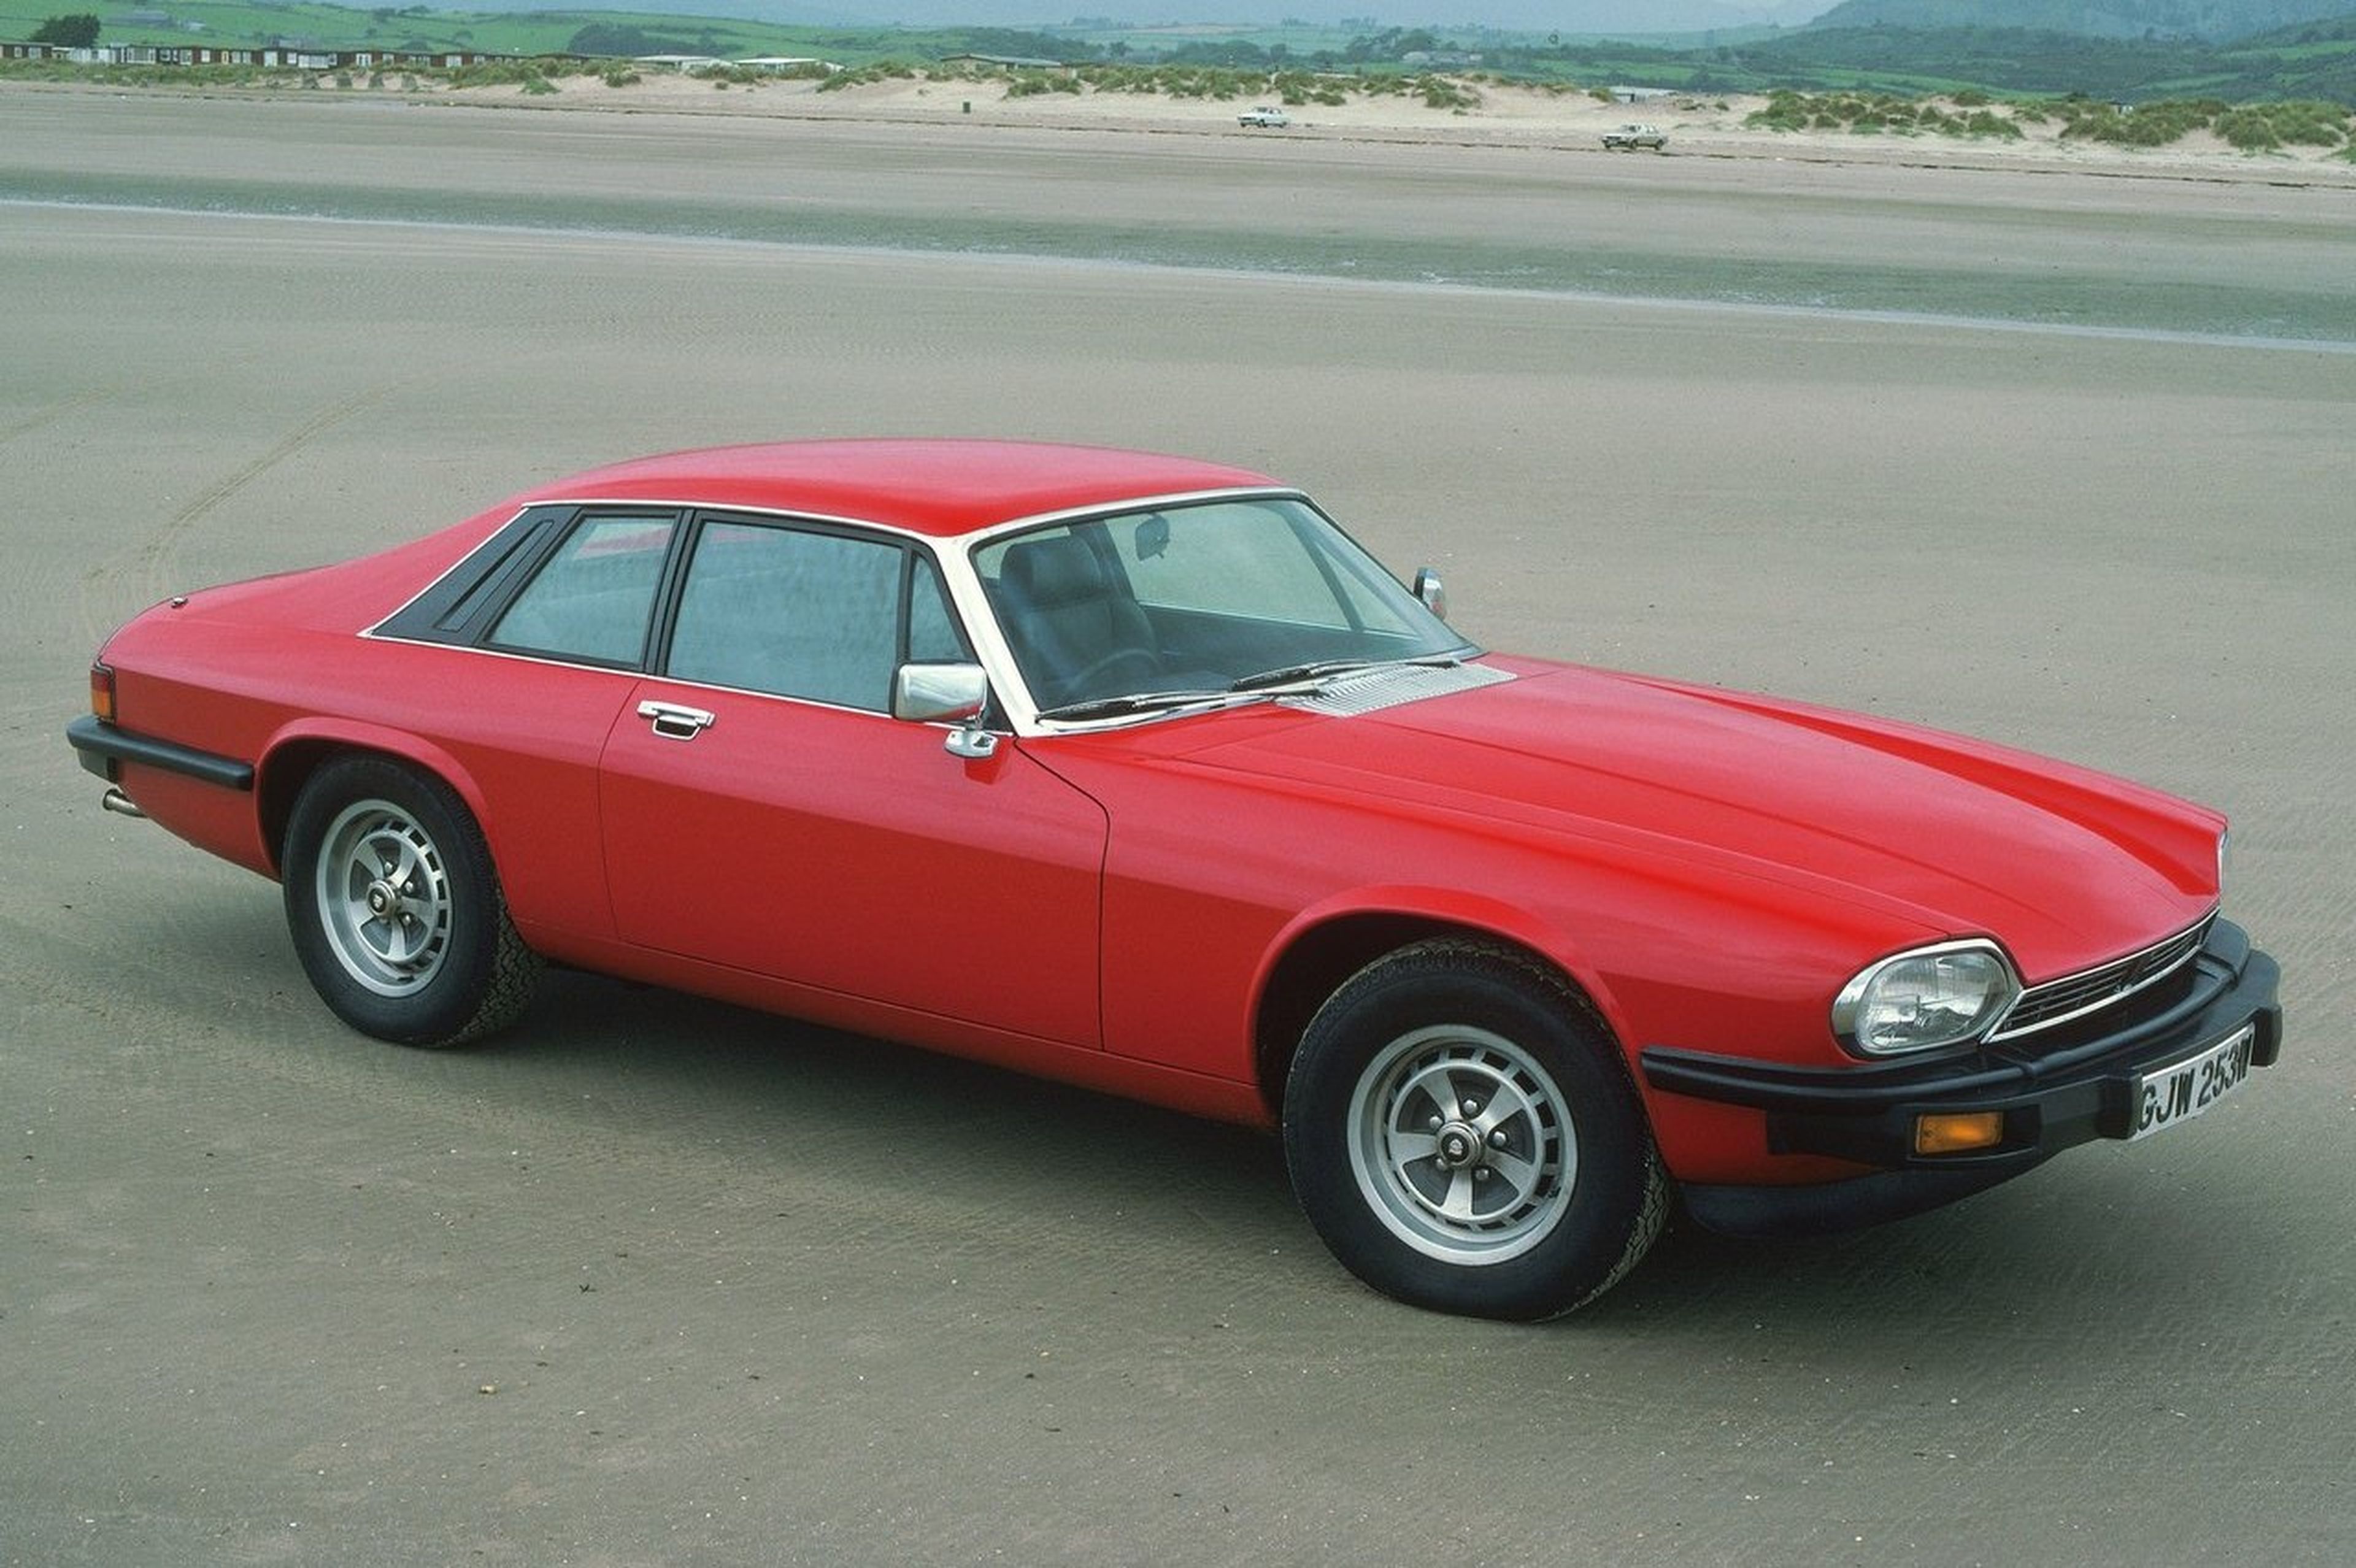 El Jaguar XJ-S revolucionó el concepto del diseño en los 70.